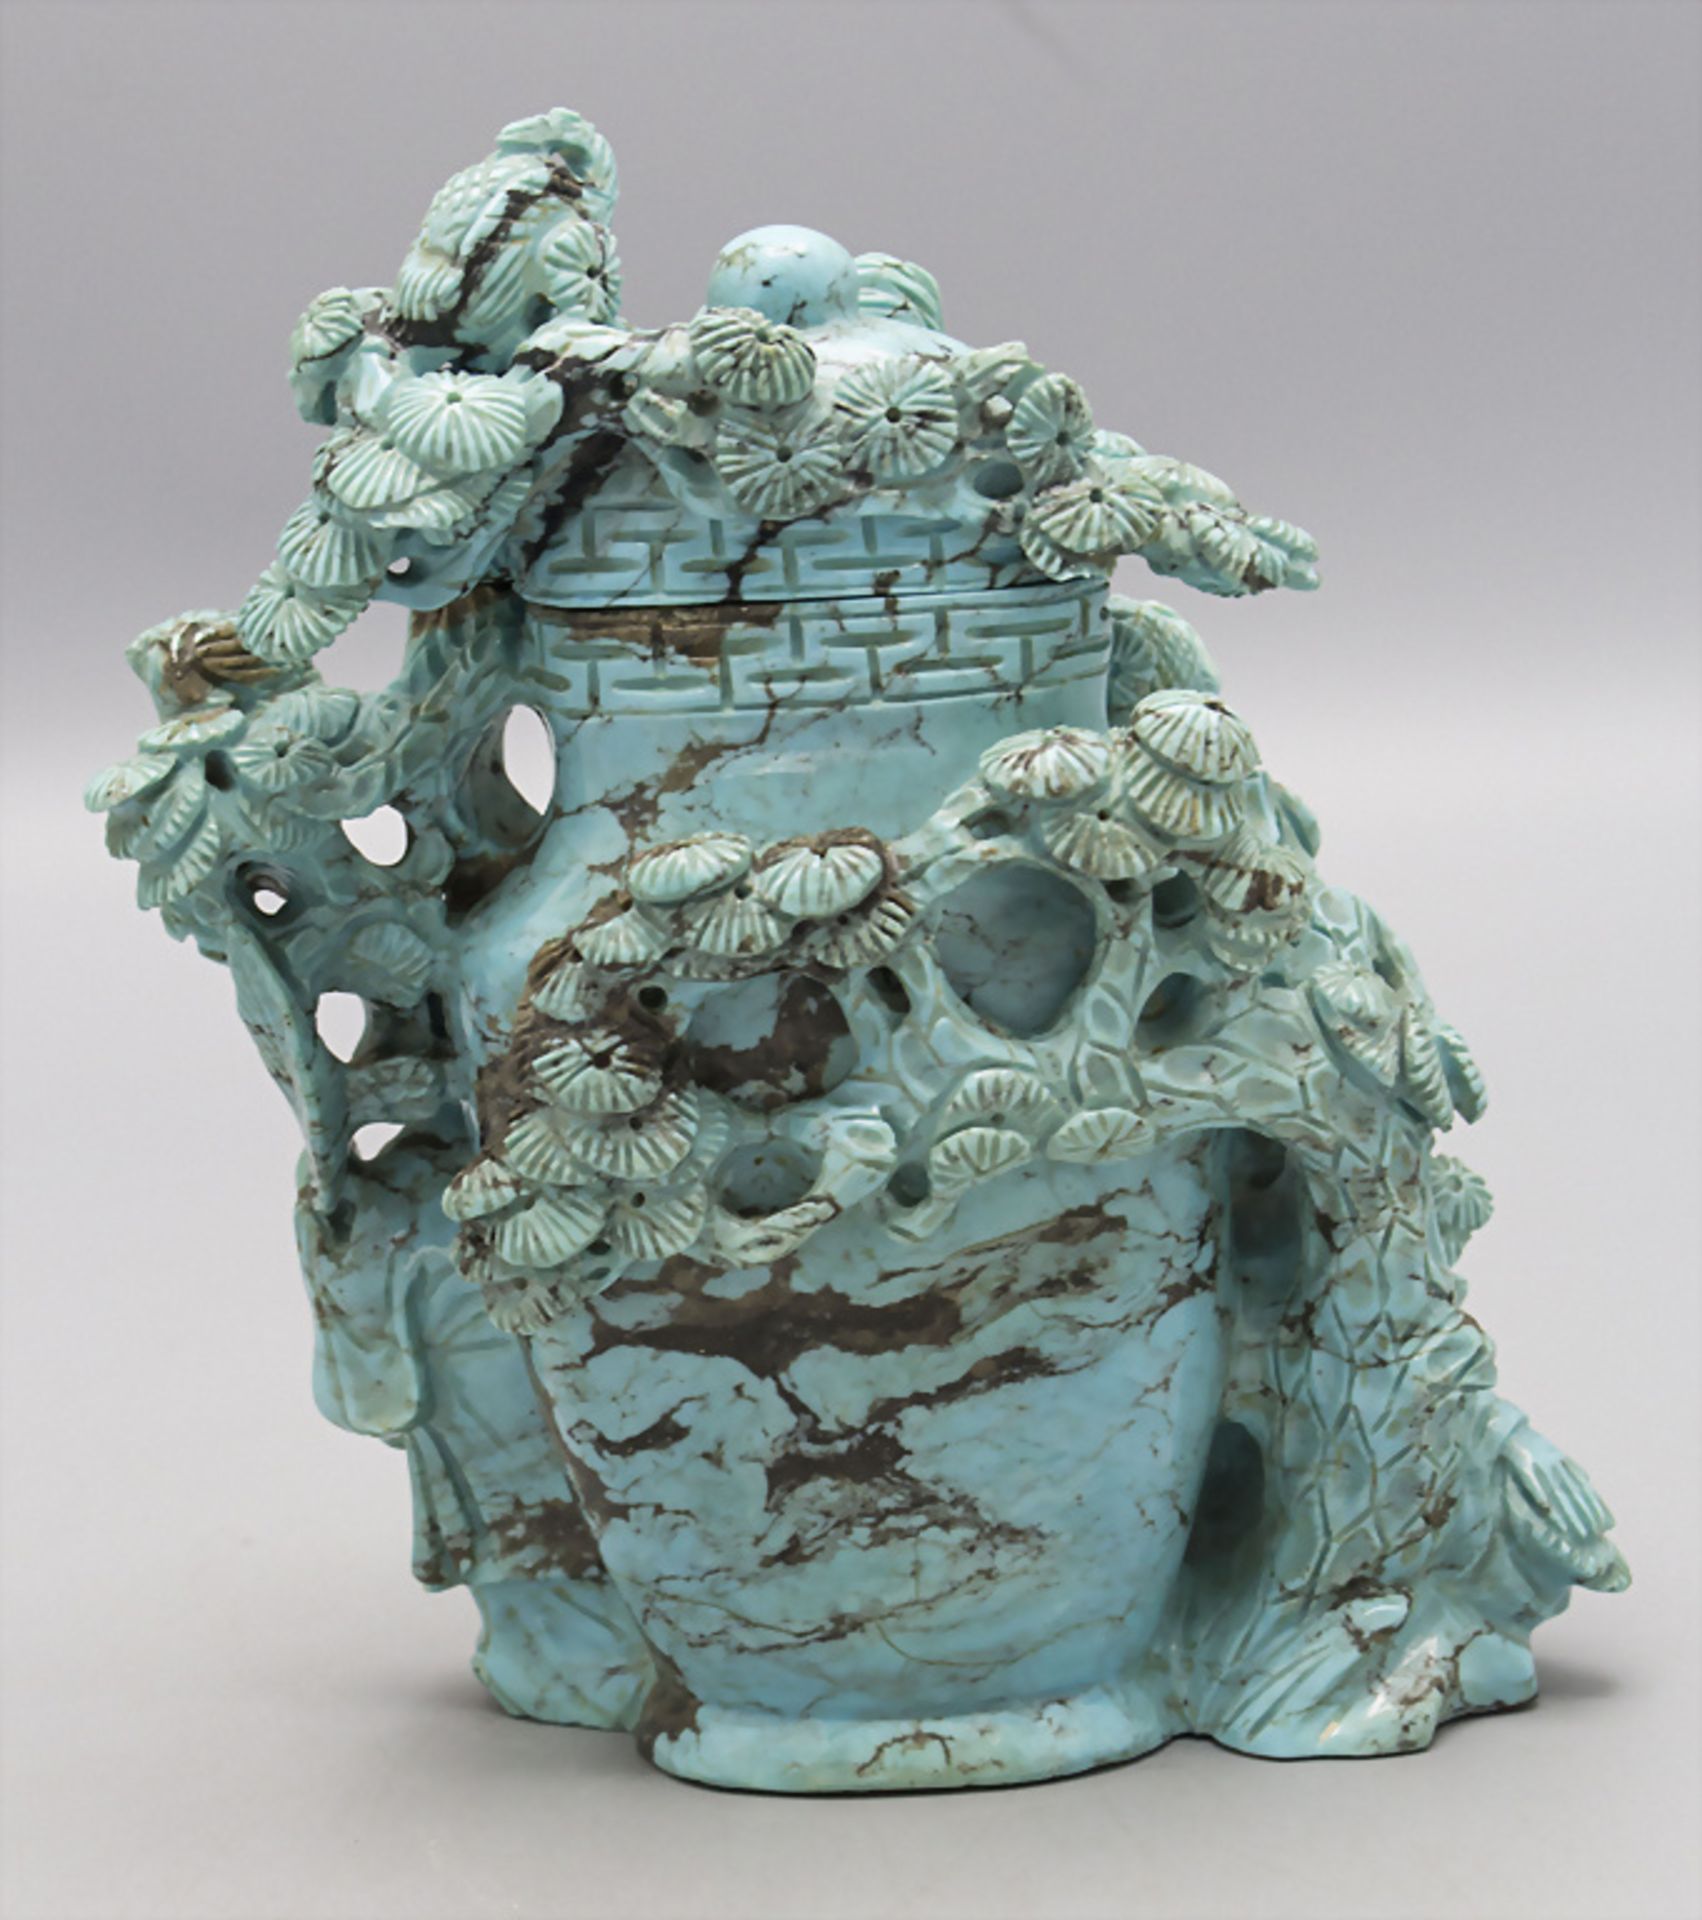 Türkis-Deckelvase / A turquoise lidded vase, China, späte Qing-Dynastie (1644-1911) - Bild 3 aus 7